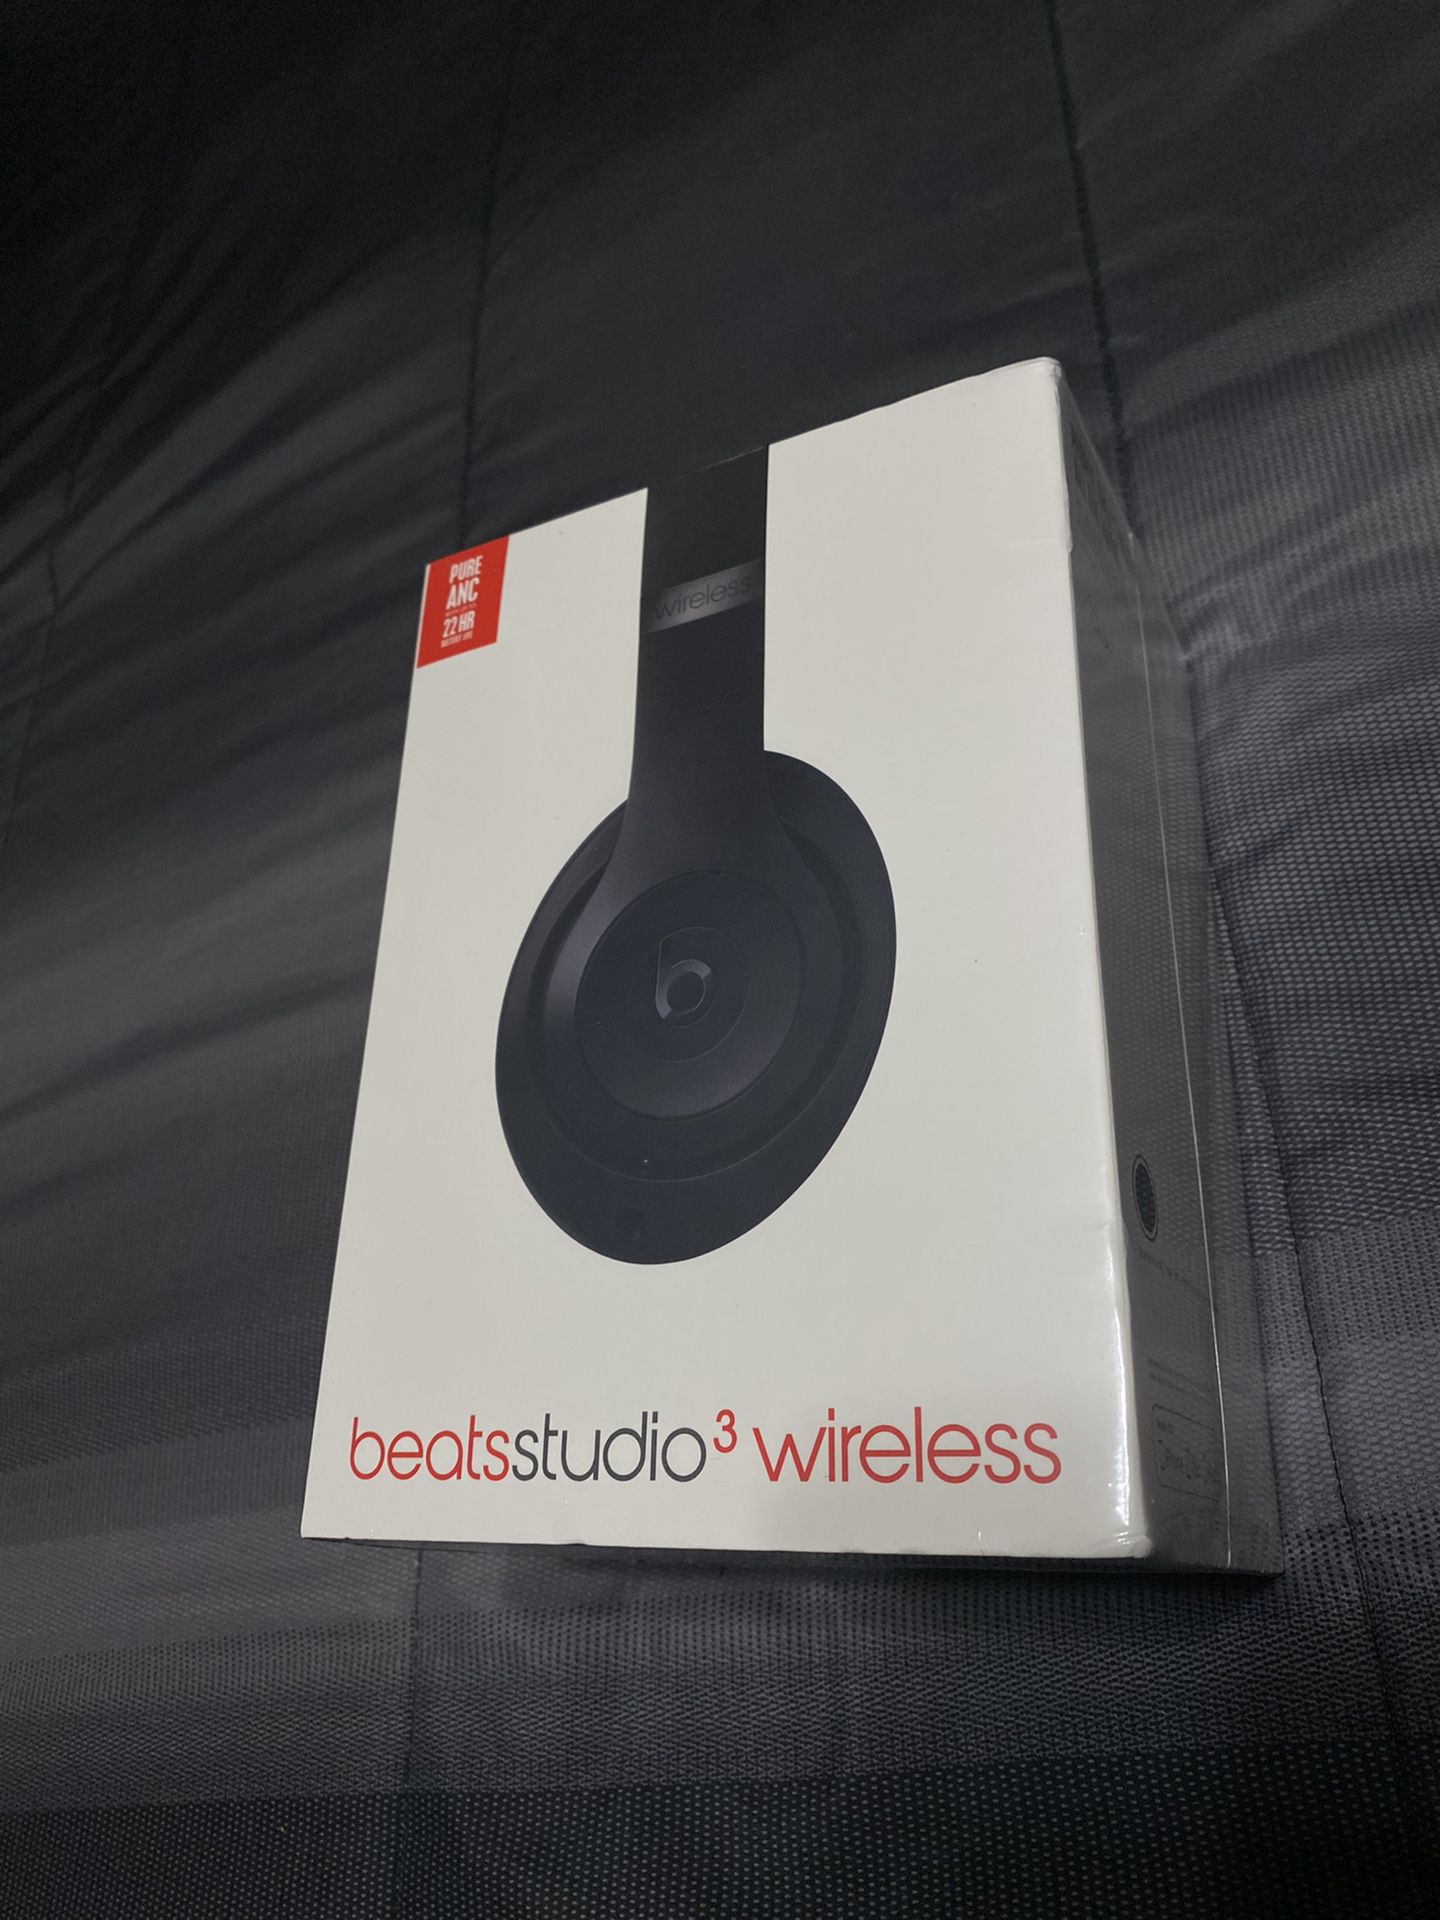 Brand New Sealed Black Beats Studio 3 Wireless Headphones NEW! Retail $350